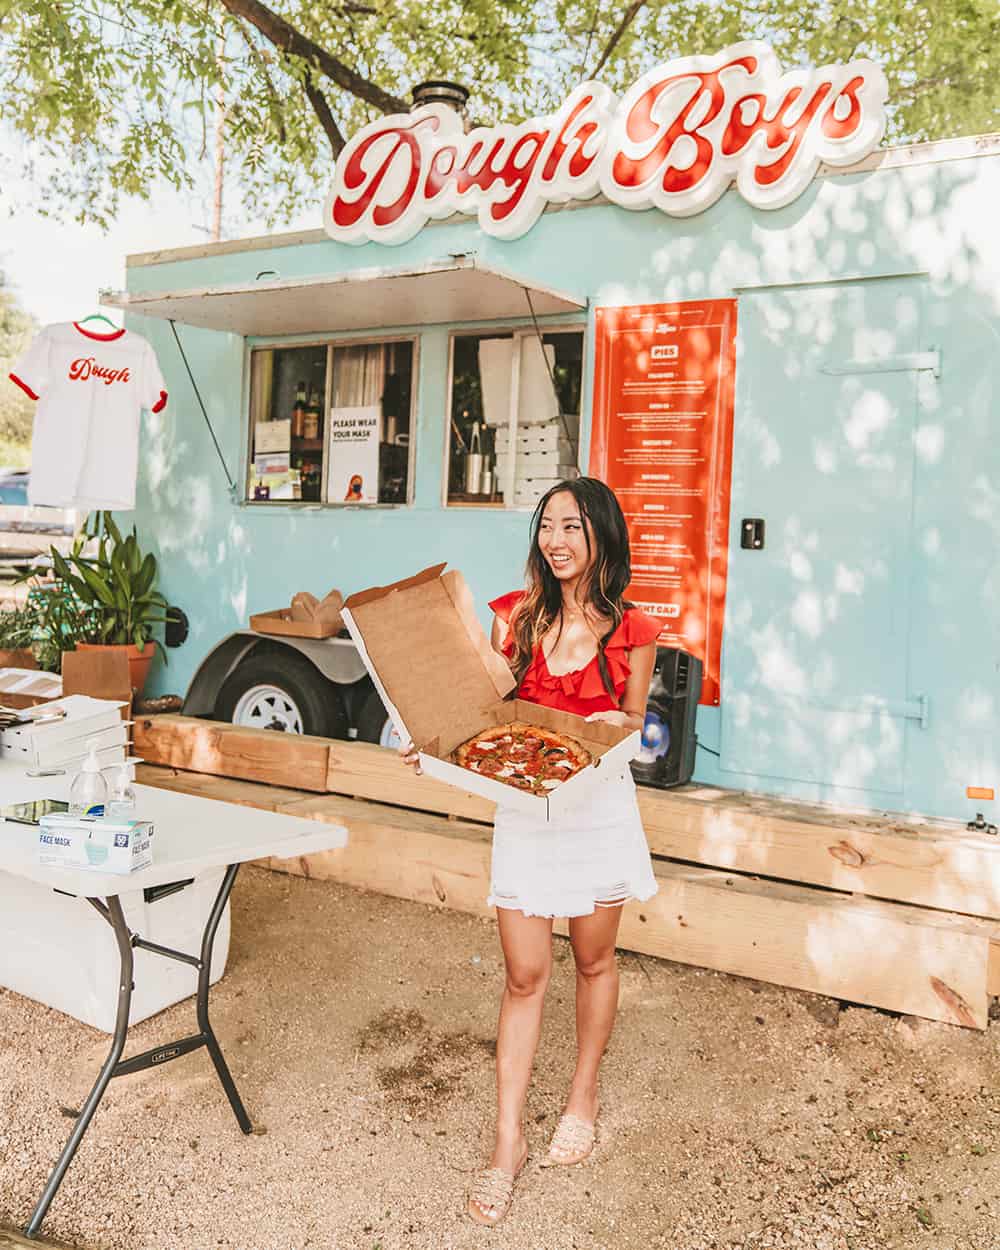 Dough Boys pizza food truck in Austin Texas